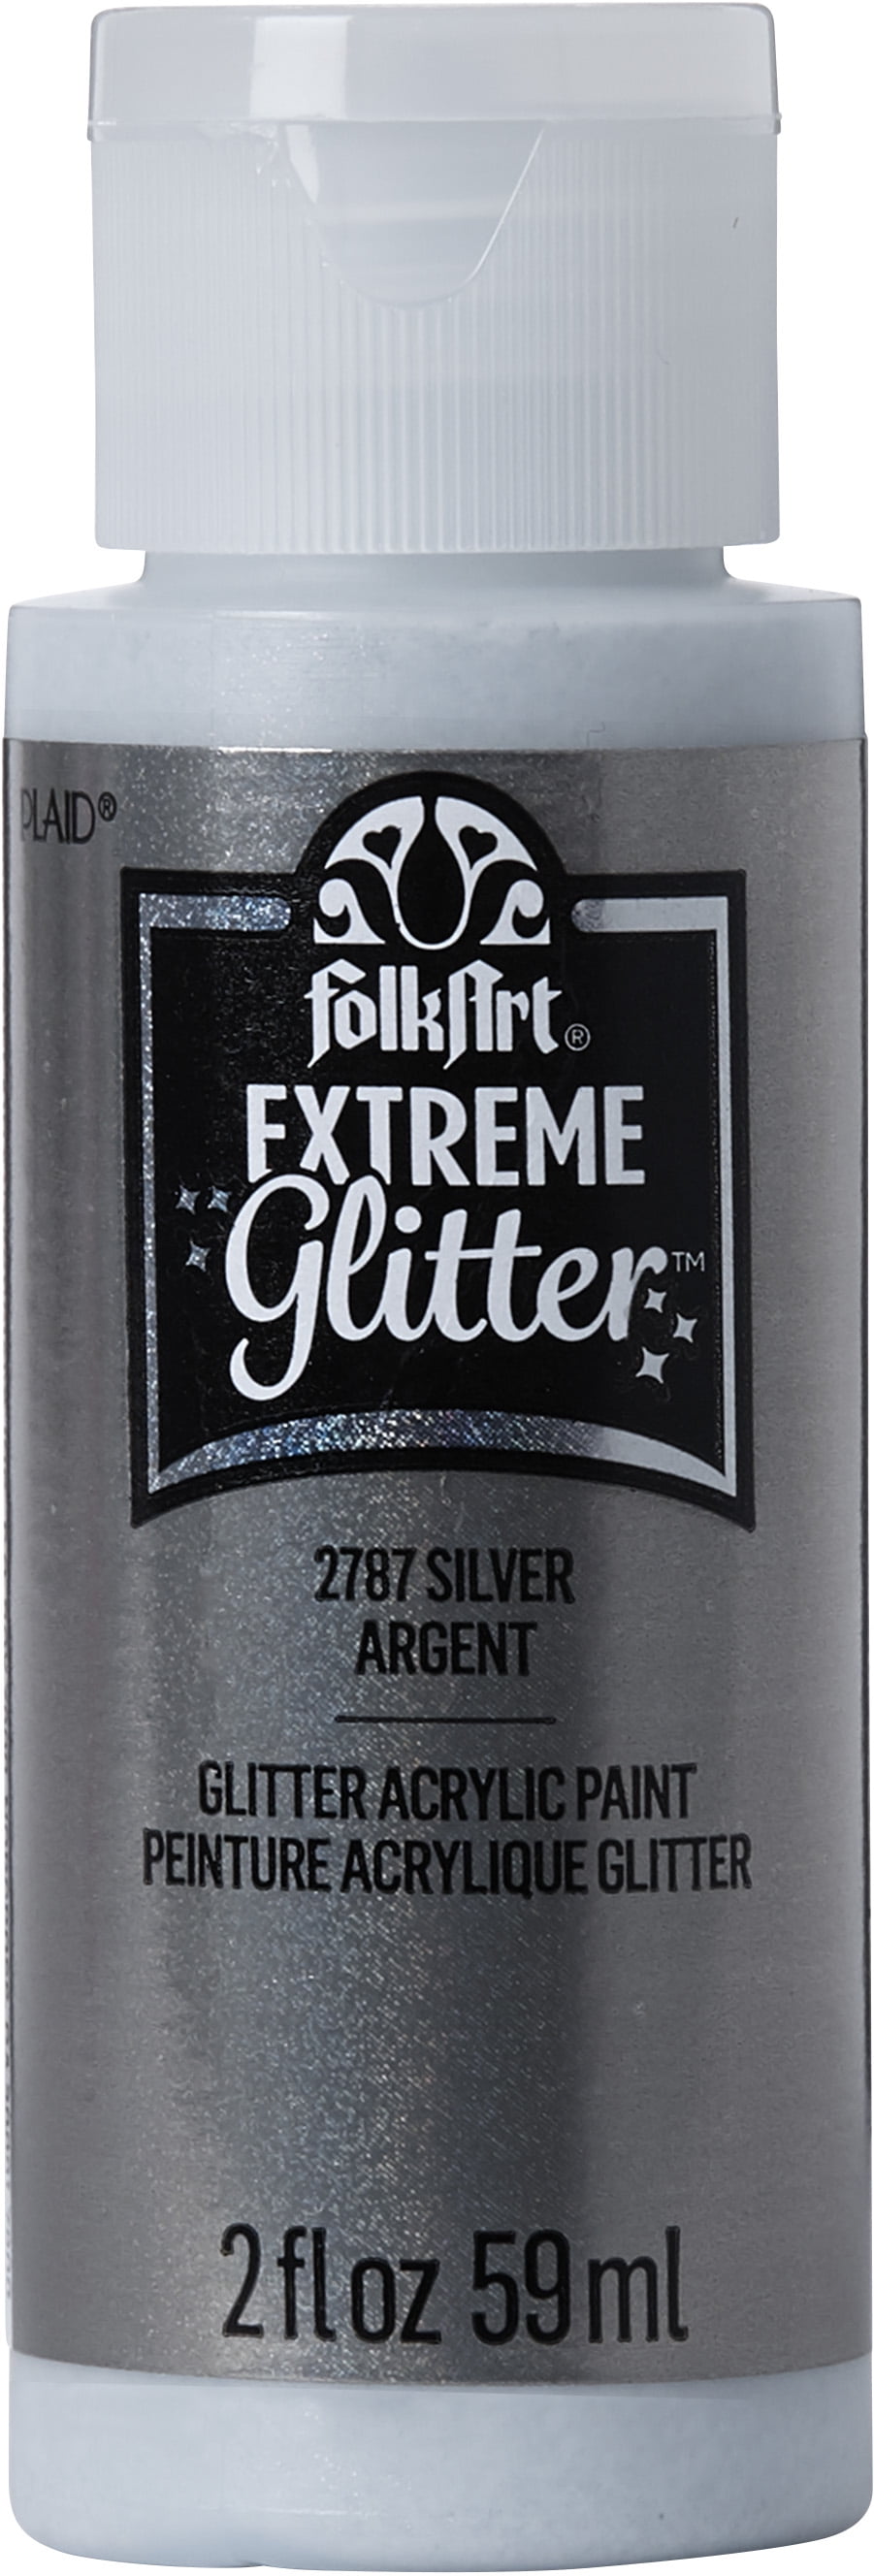 FolkArt Extreme Glitter Acrylic Craft Paint, Glitter Finish, Silver, 2 fl oz